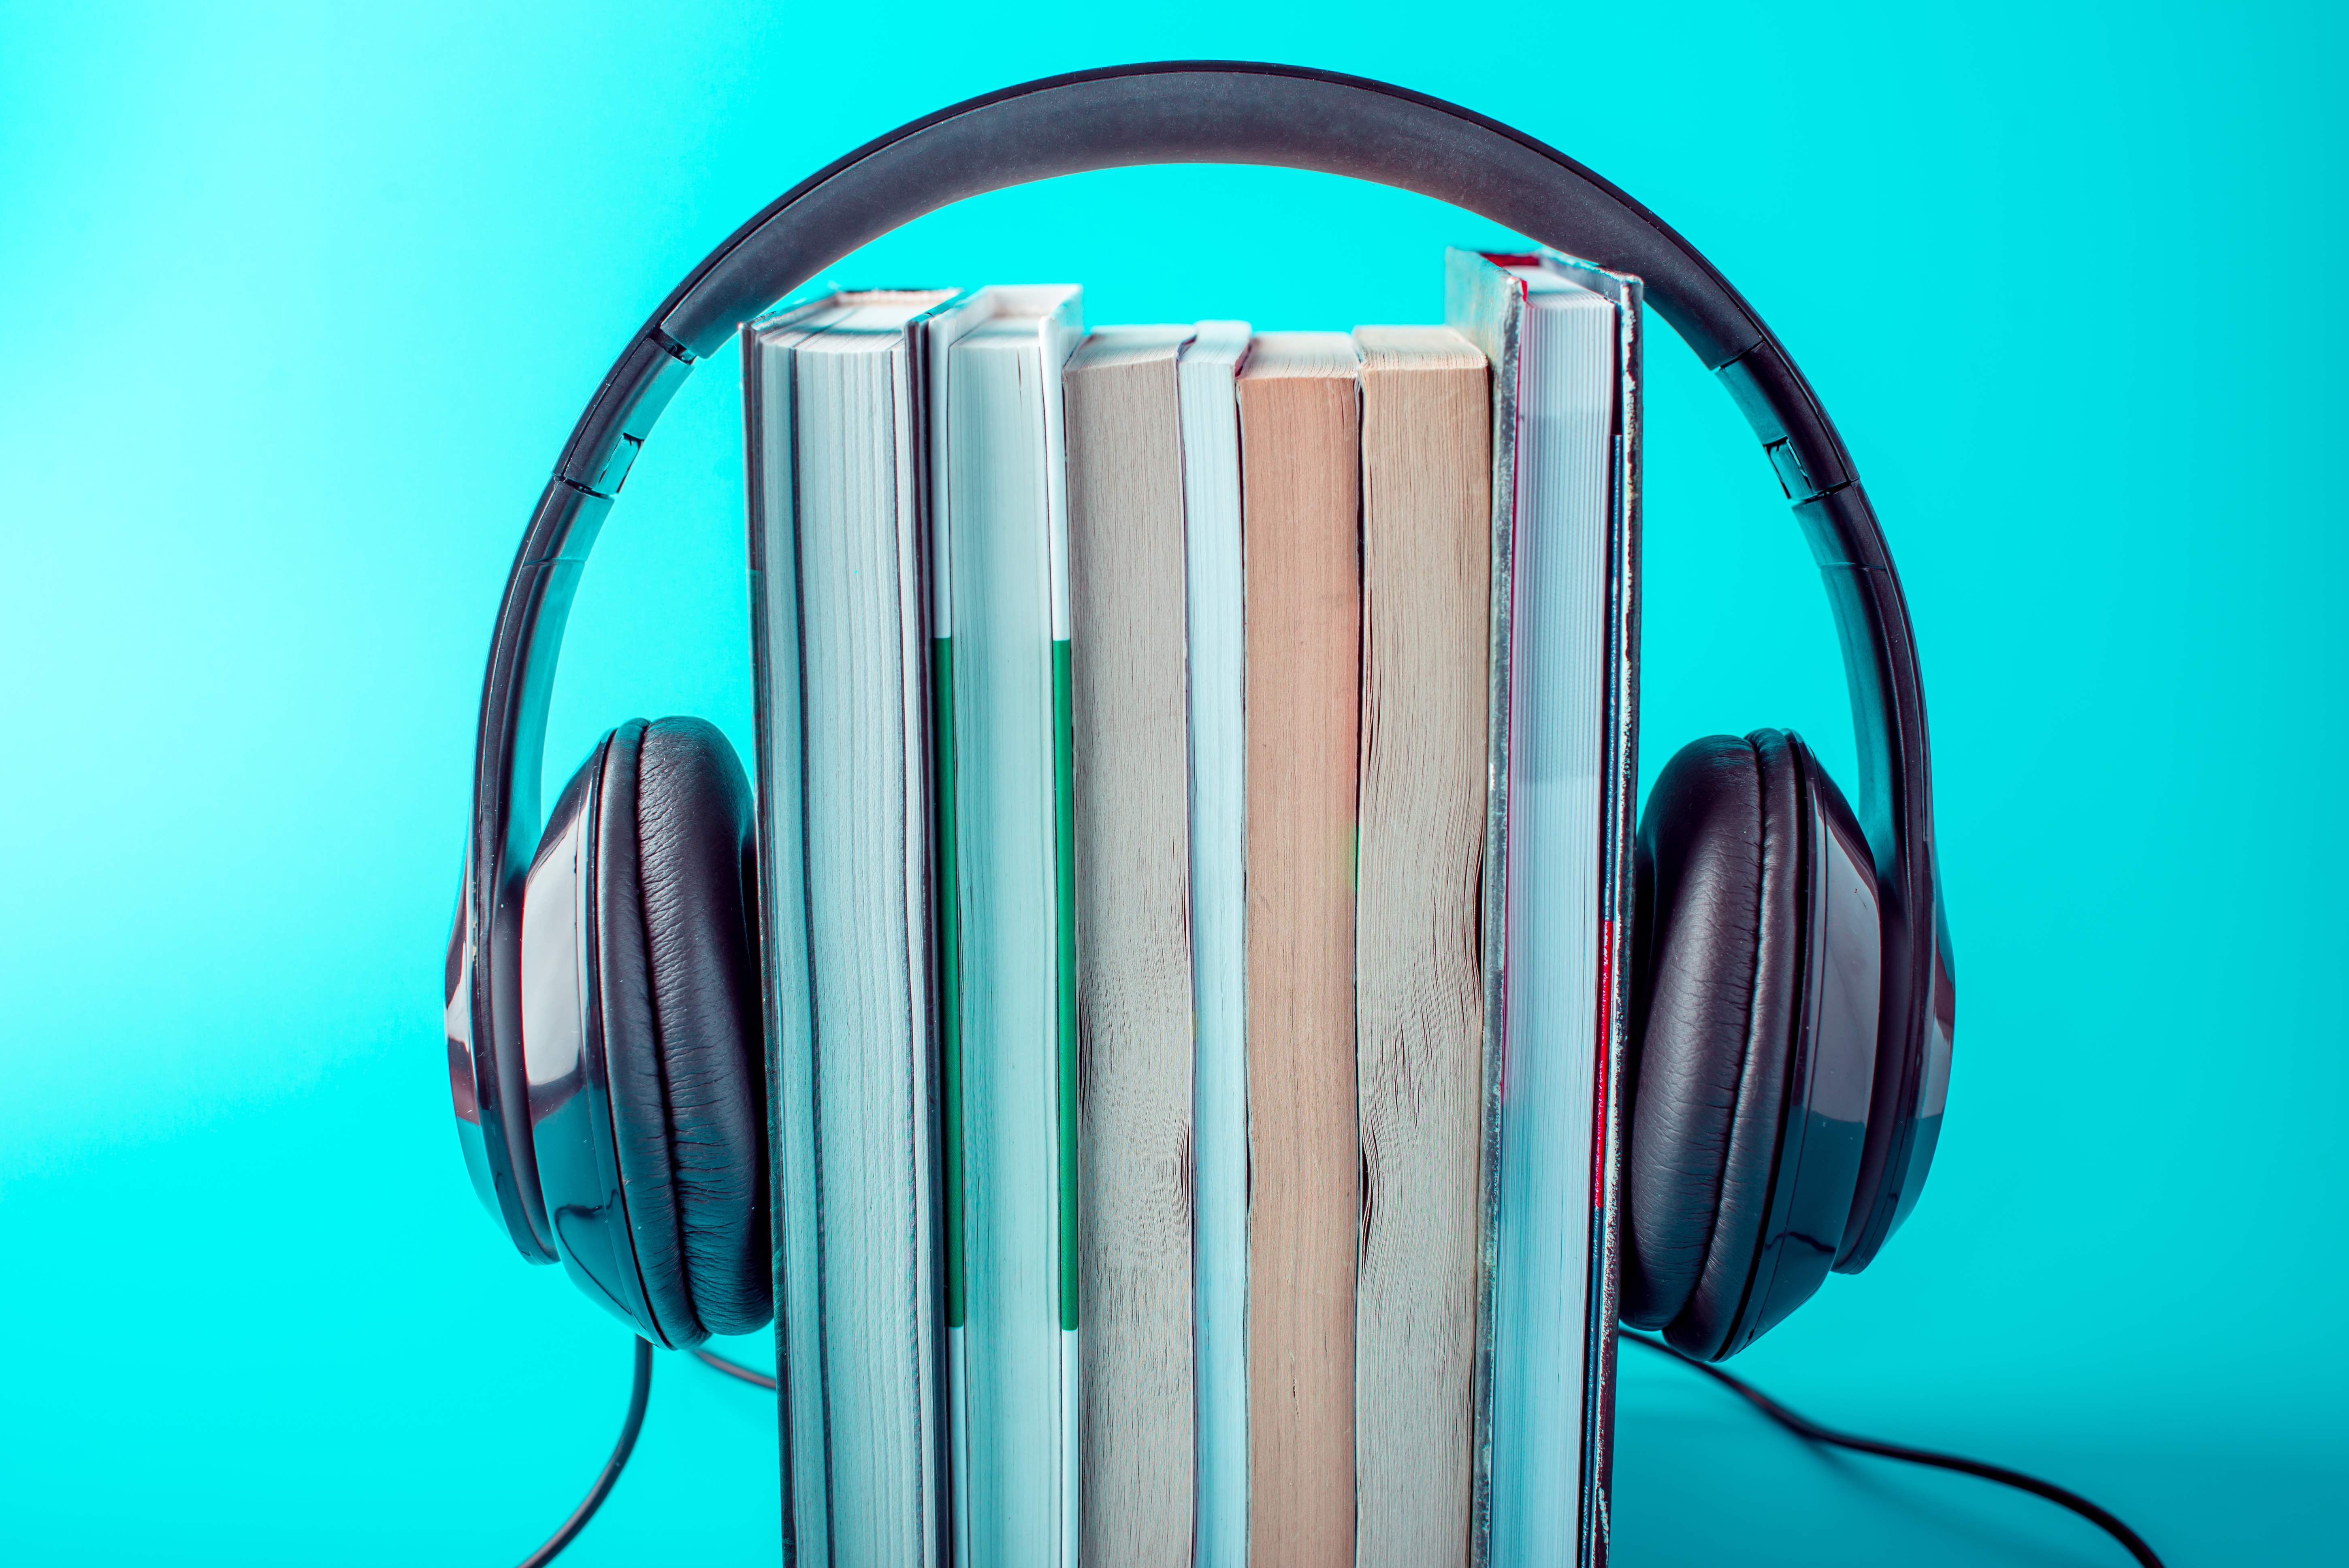 Are audiobooks better than TV?